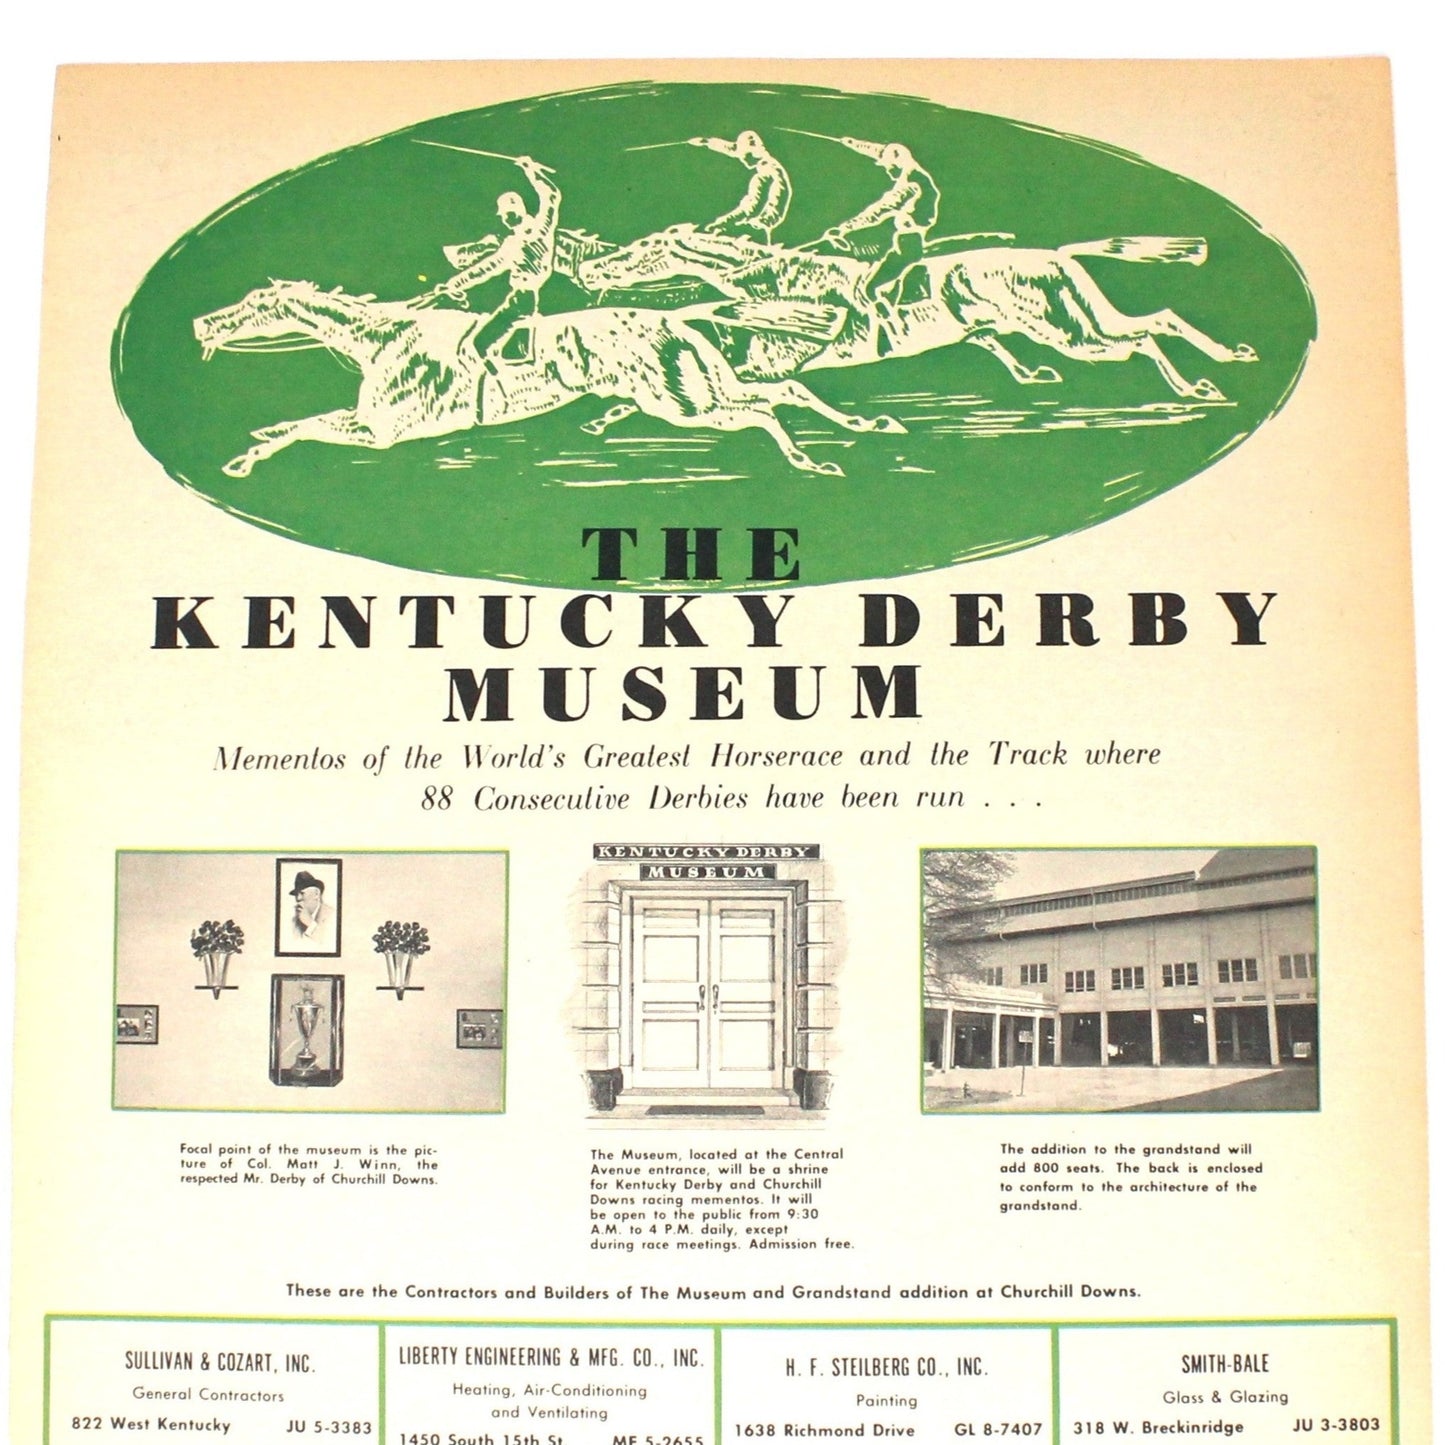 Advertisement, Kentucky Derby Museum, 1962, Original Magazine Ad, Vintage